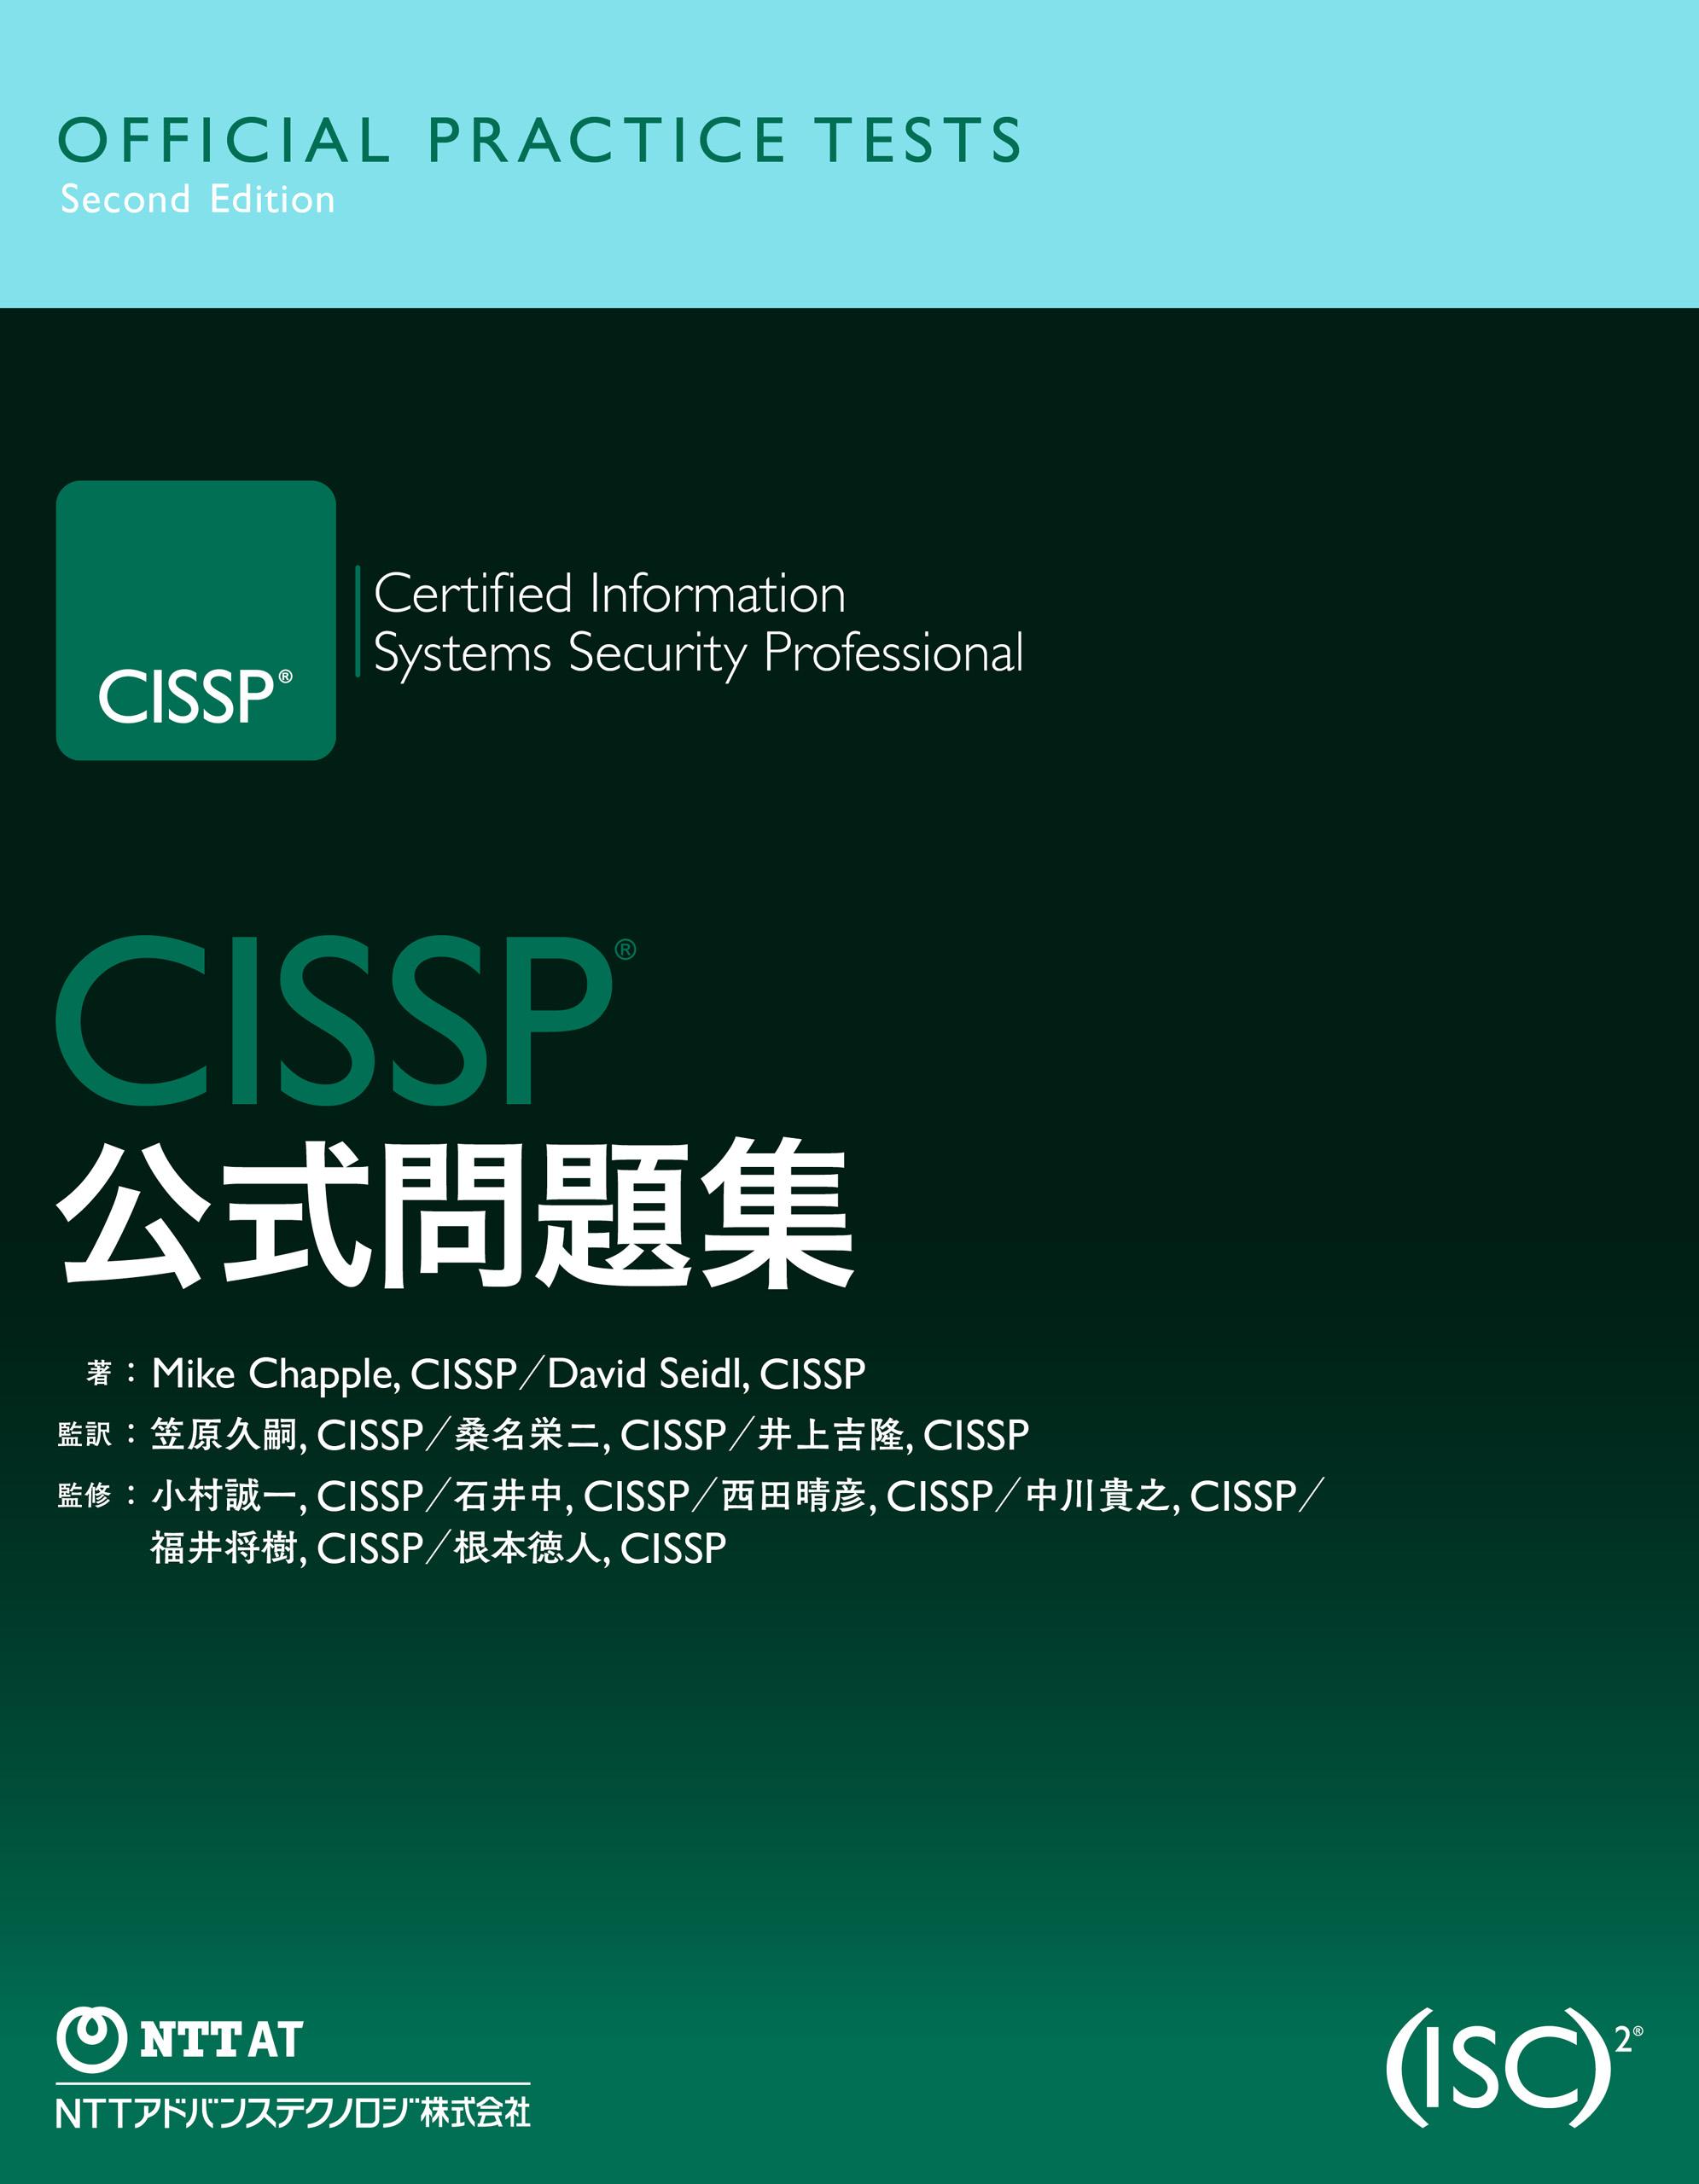 CISSP 公式問題集の表紙画像